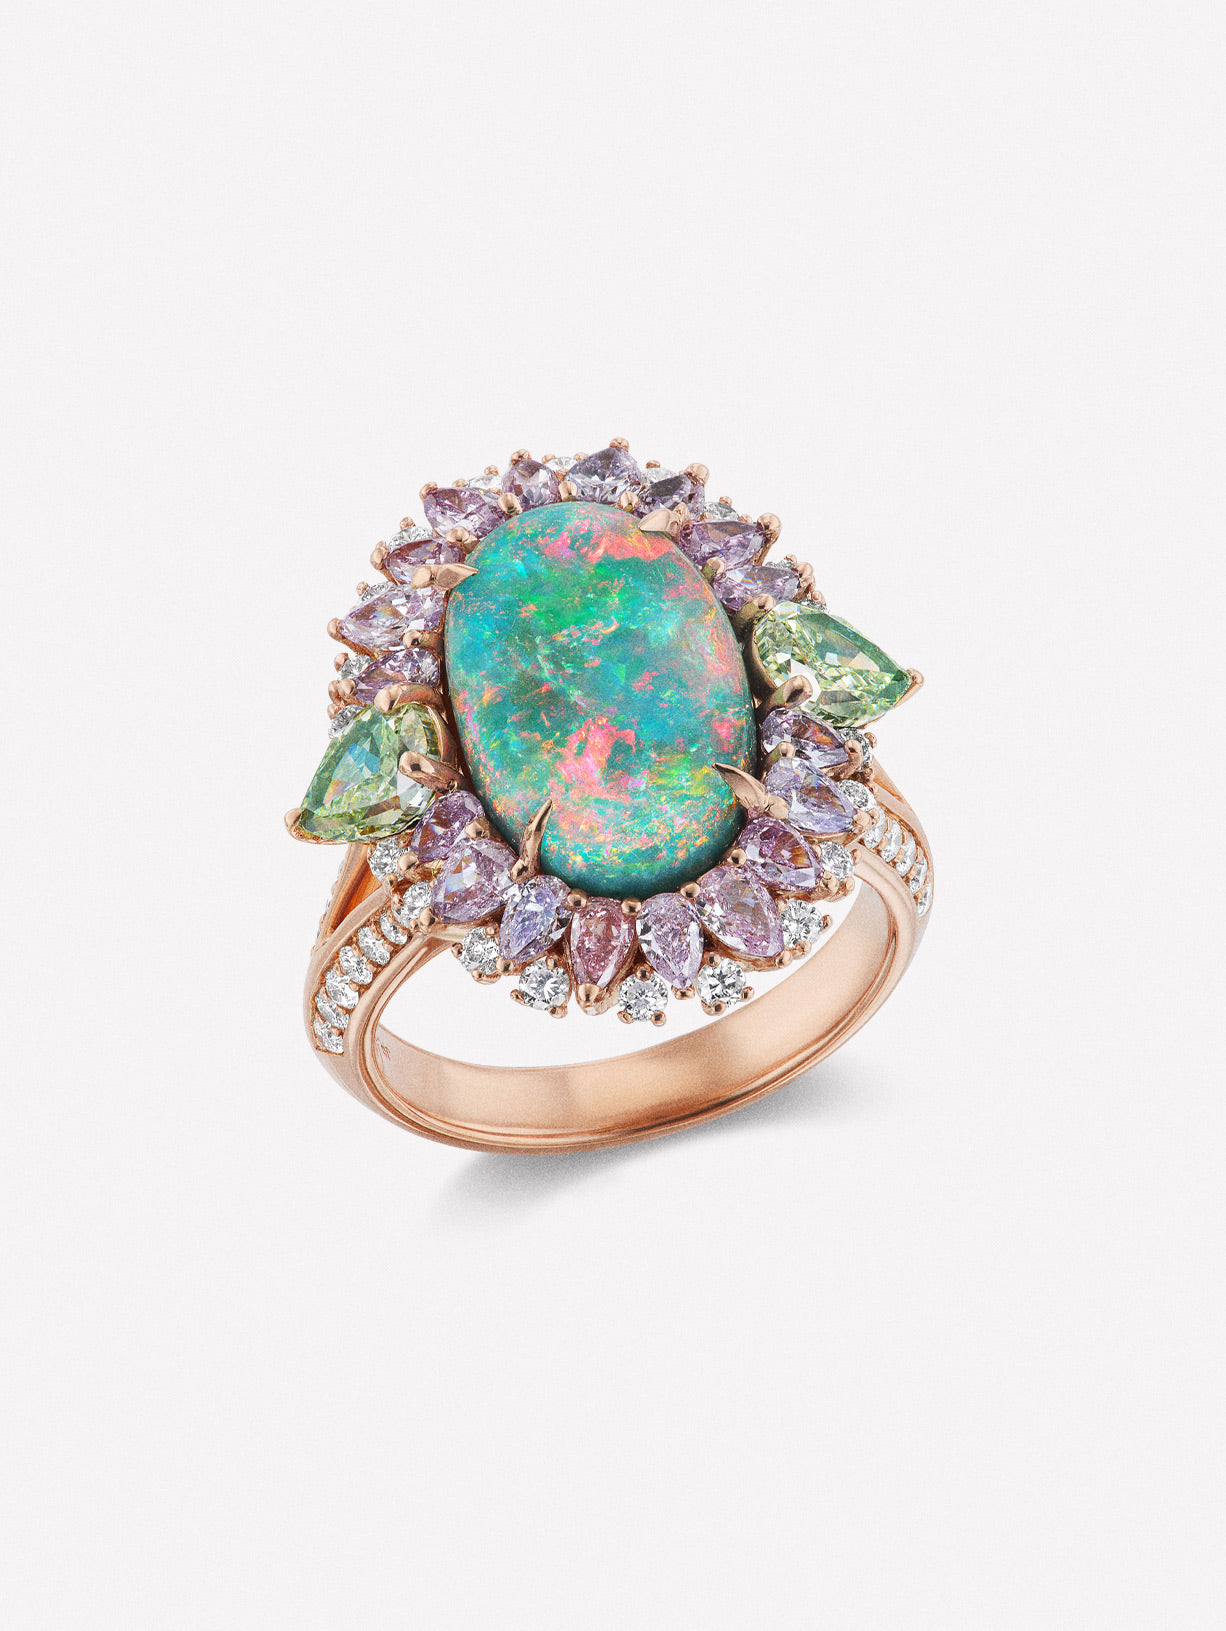 Australian Opal and Green Diamond and Pink Diamond Fashion Ring by JFINE Diamonds